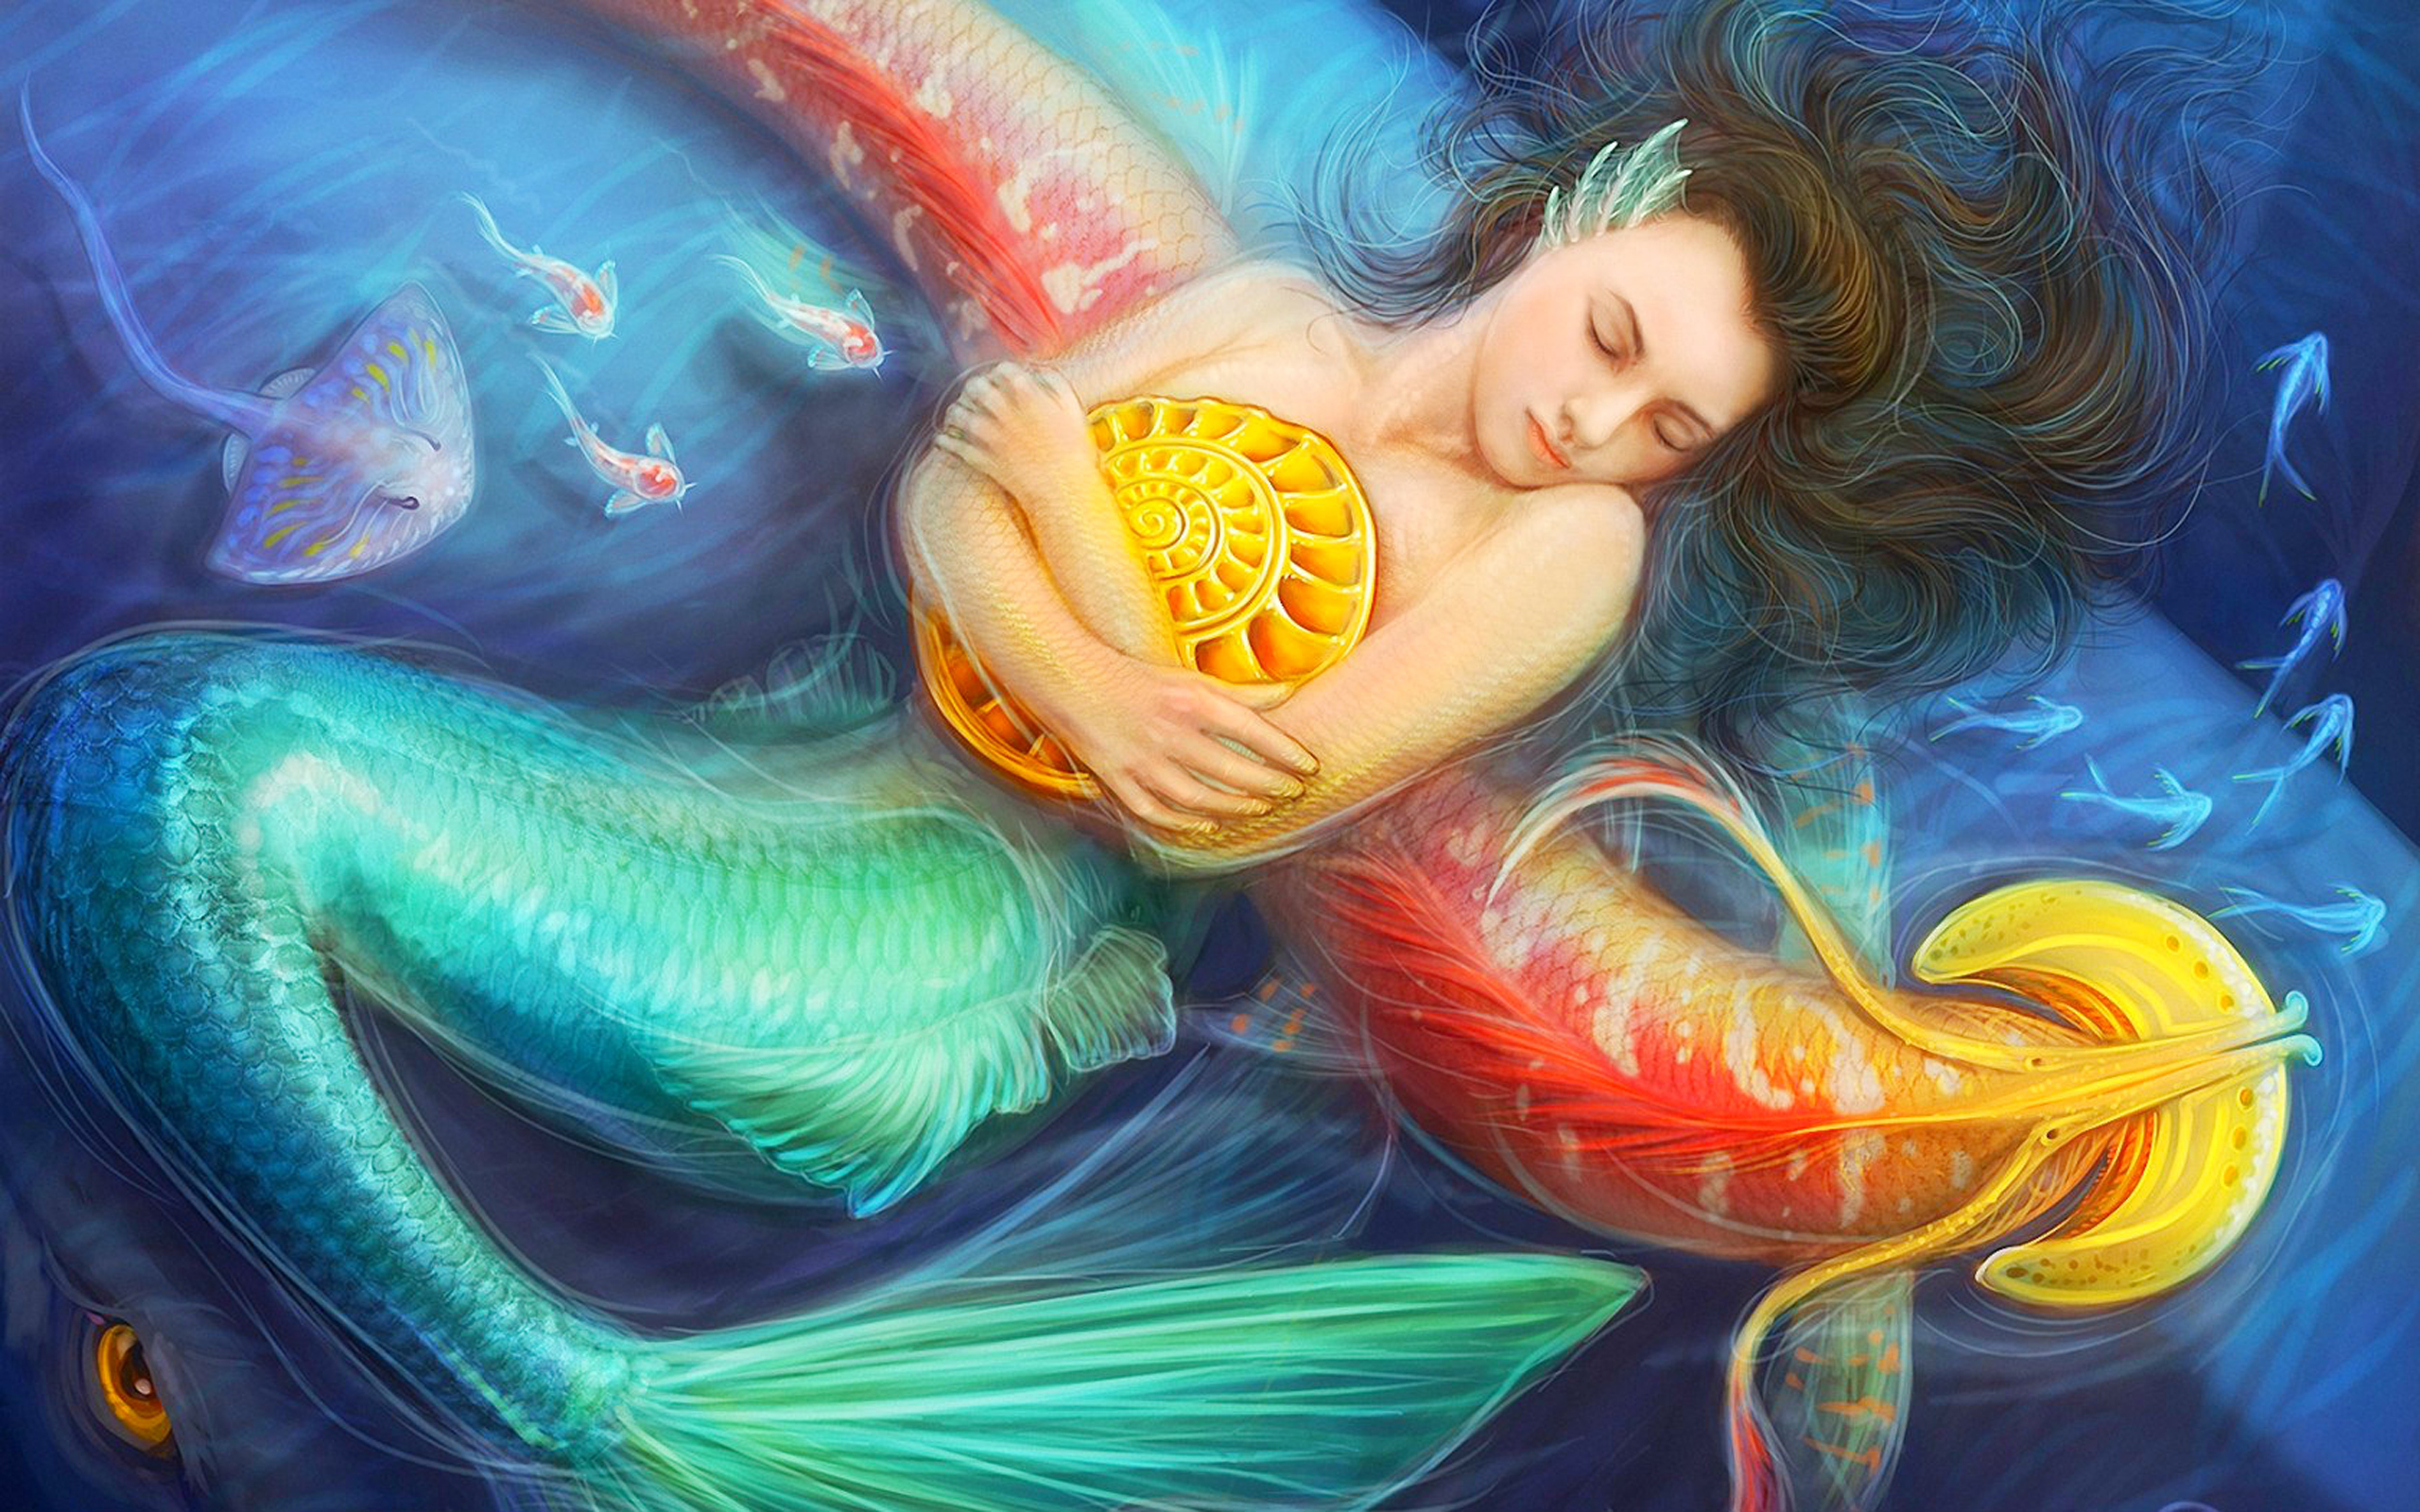 Mermaid in the Ocean by AlsaresNoLynx